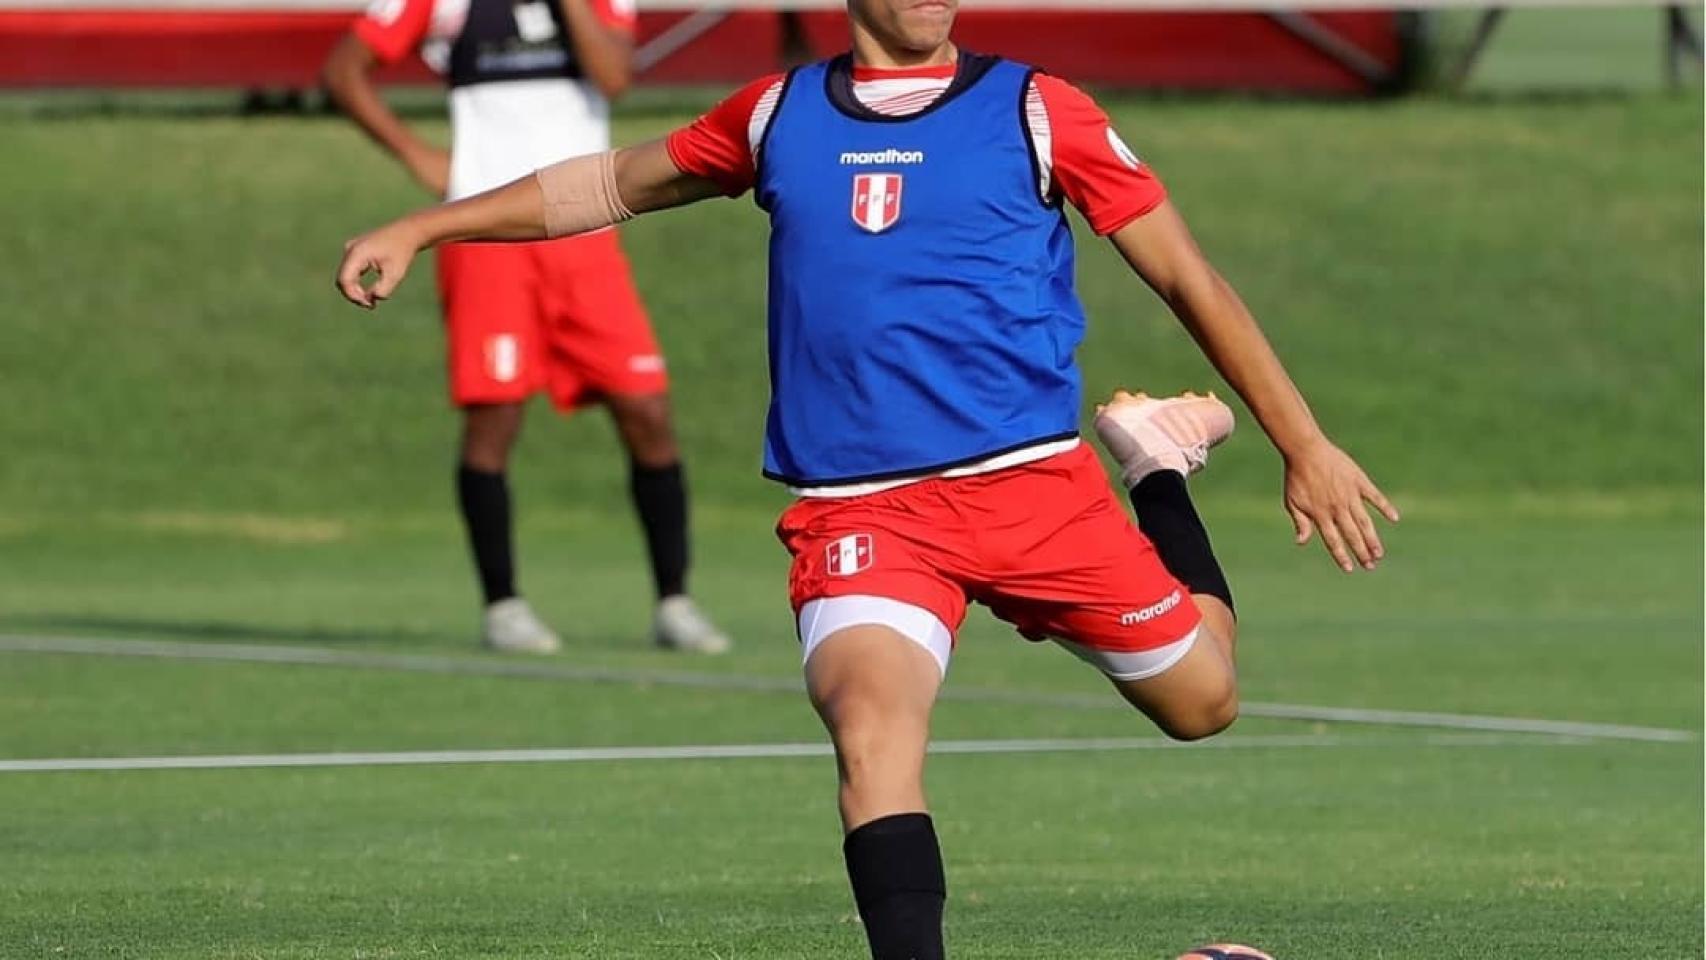 Yuriel Celi, futbolista peruano. Foto: Instagram (@yurielceli)